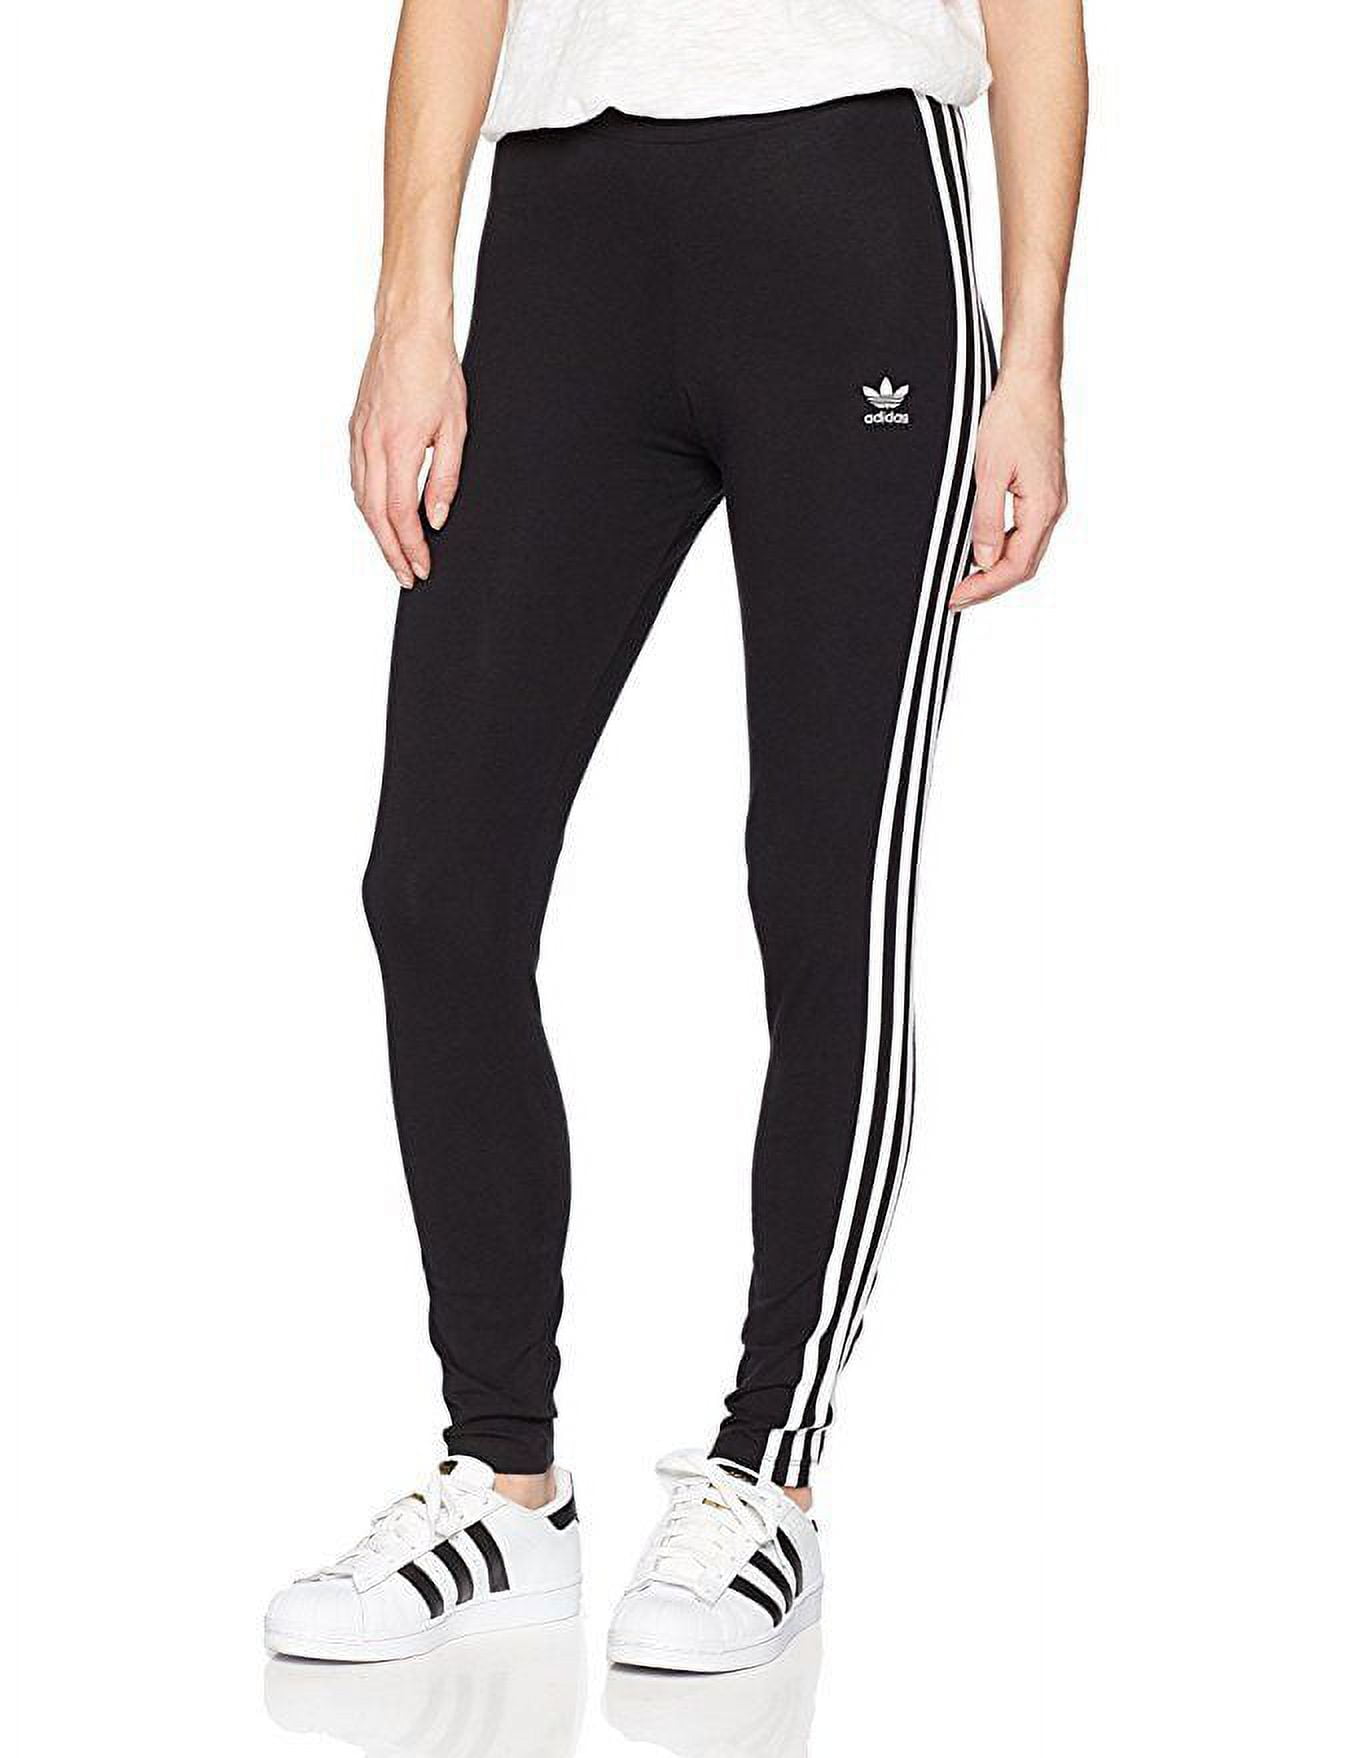 Pant (Black, Tight Adidas Women\'s Athletic Pants 3 Stripe Leggings Joggers XS)